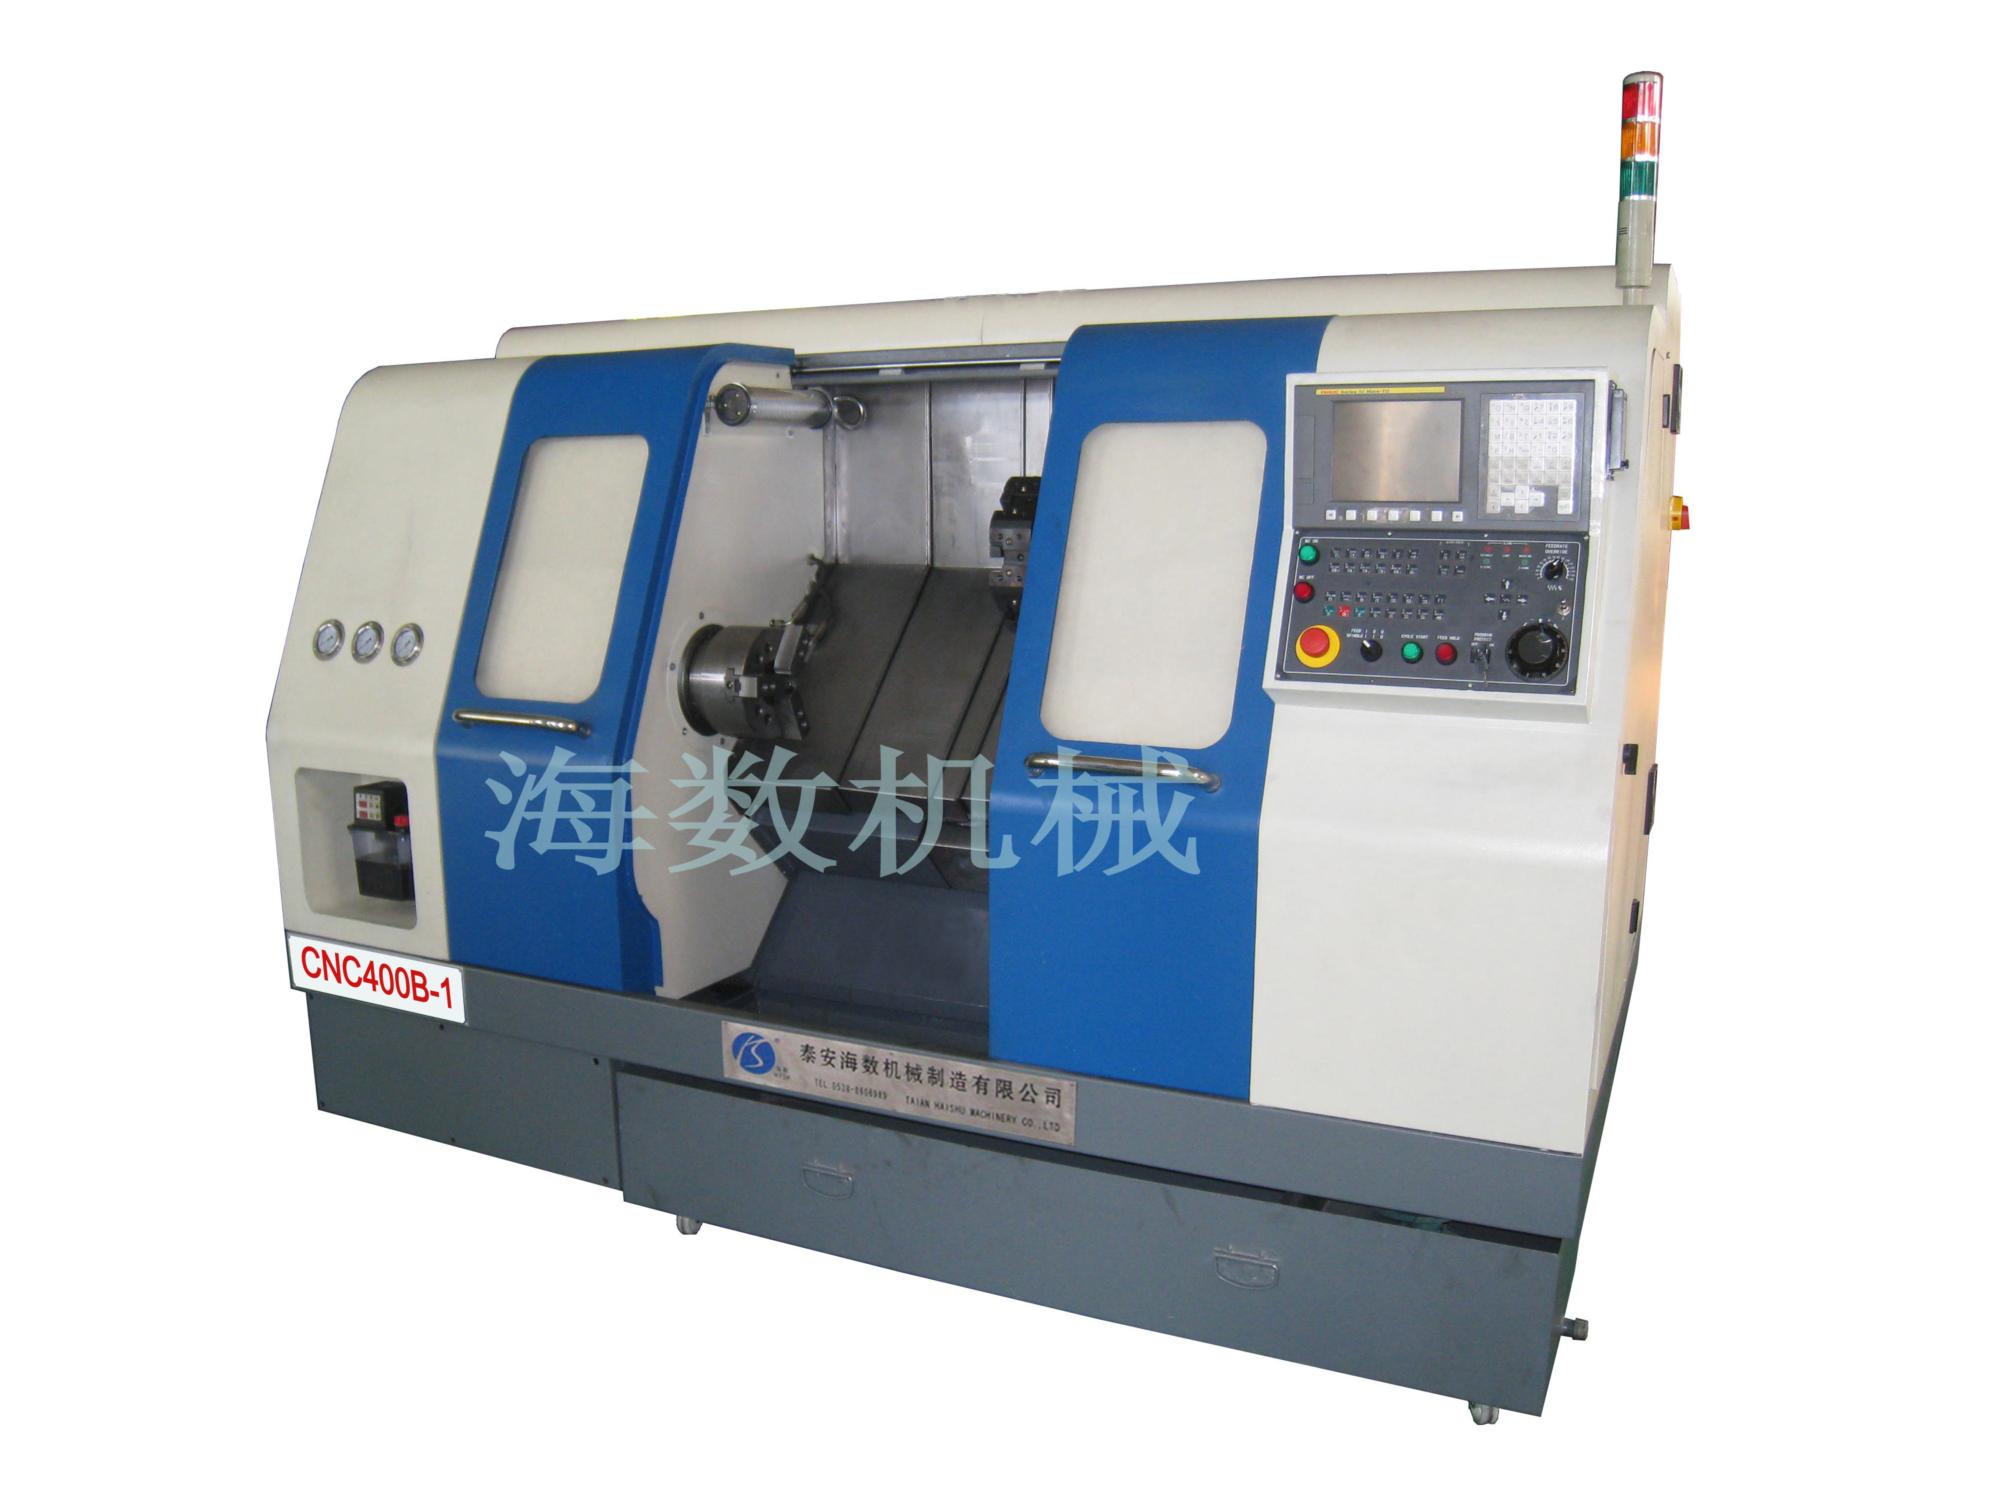 CNC（B-1）Series slant bed CNC Lathe